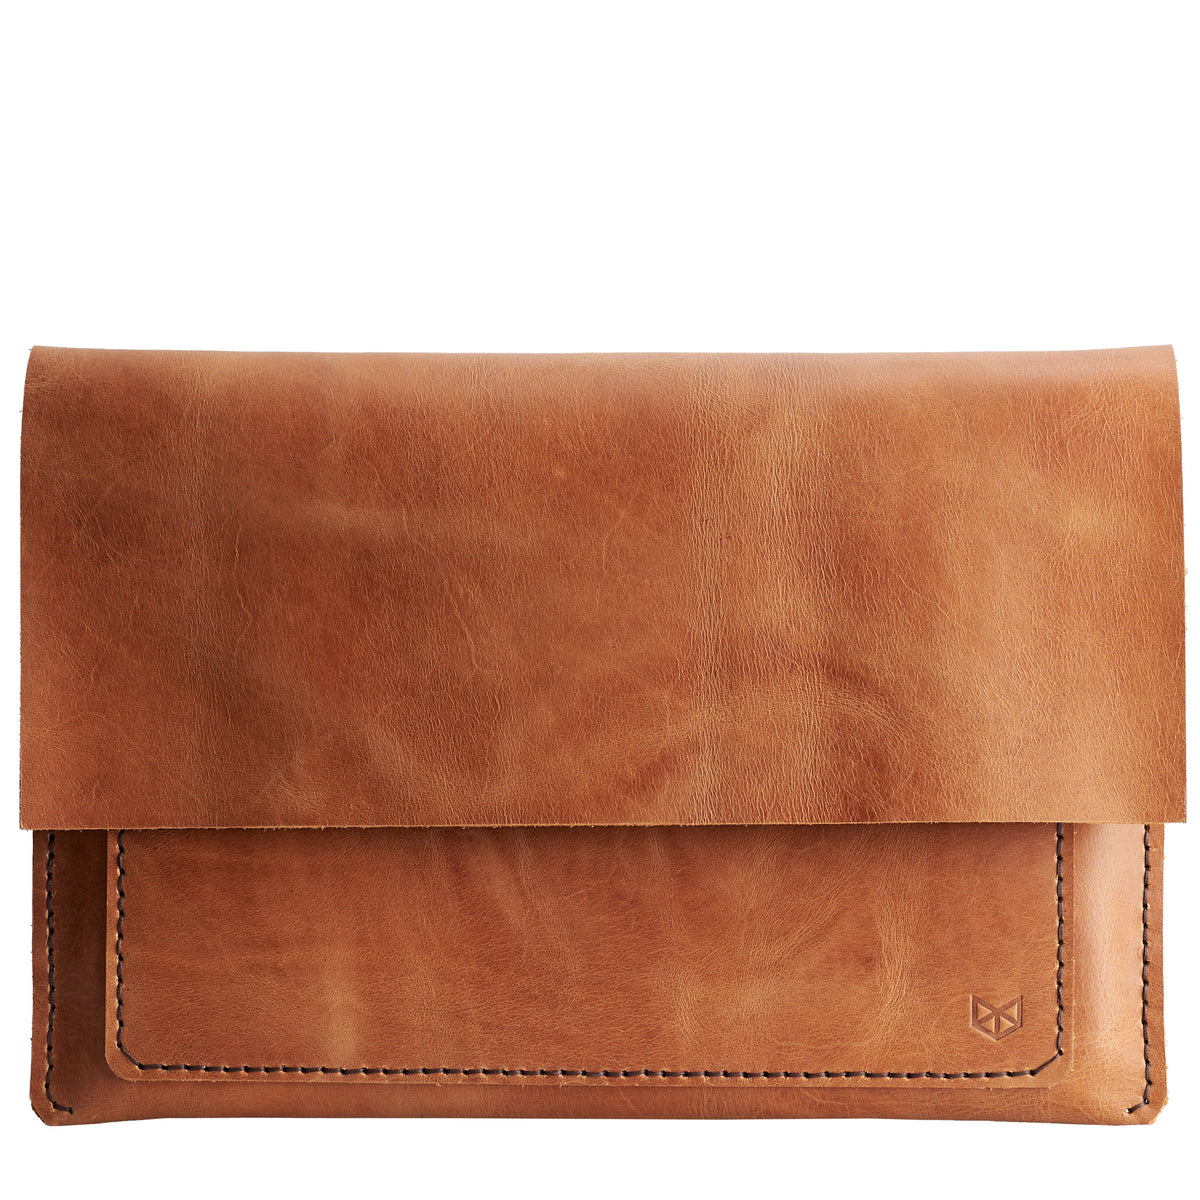 Closed. Tan Leather MacBook Case. Postman MacBook Sleeve by Capra Leather